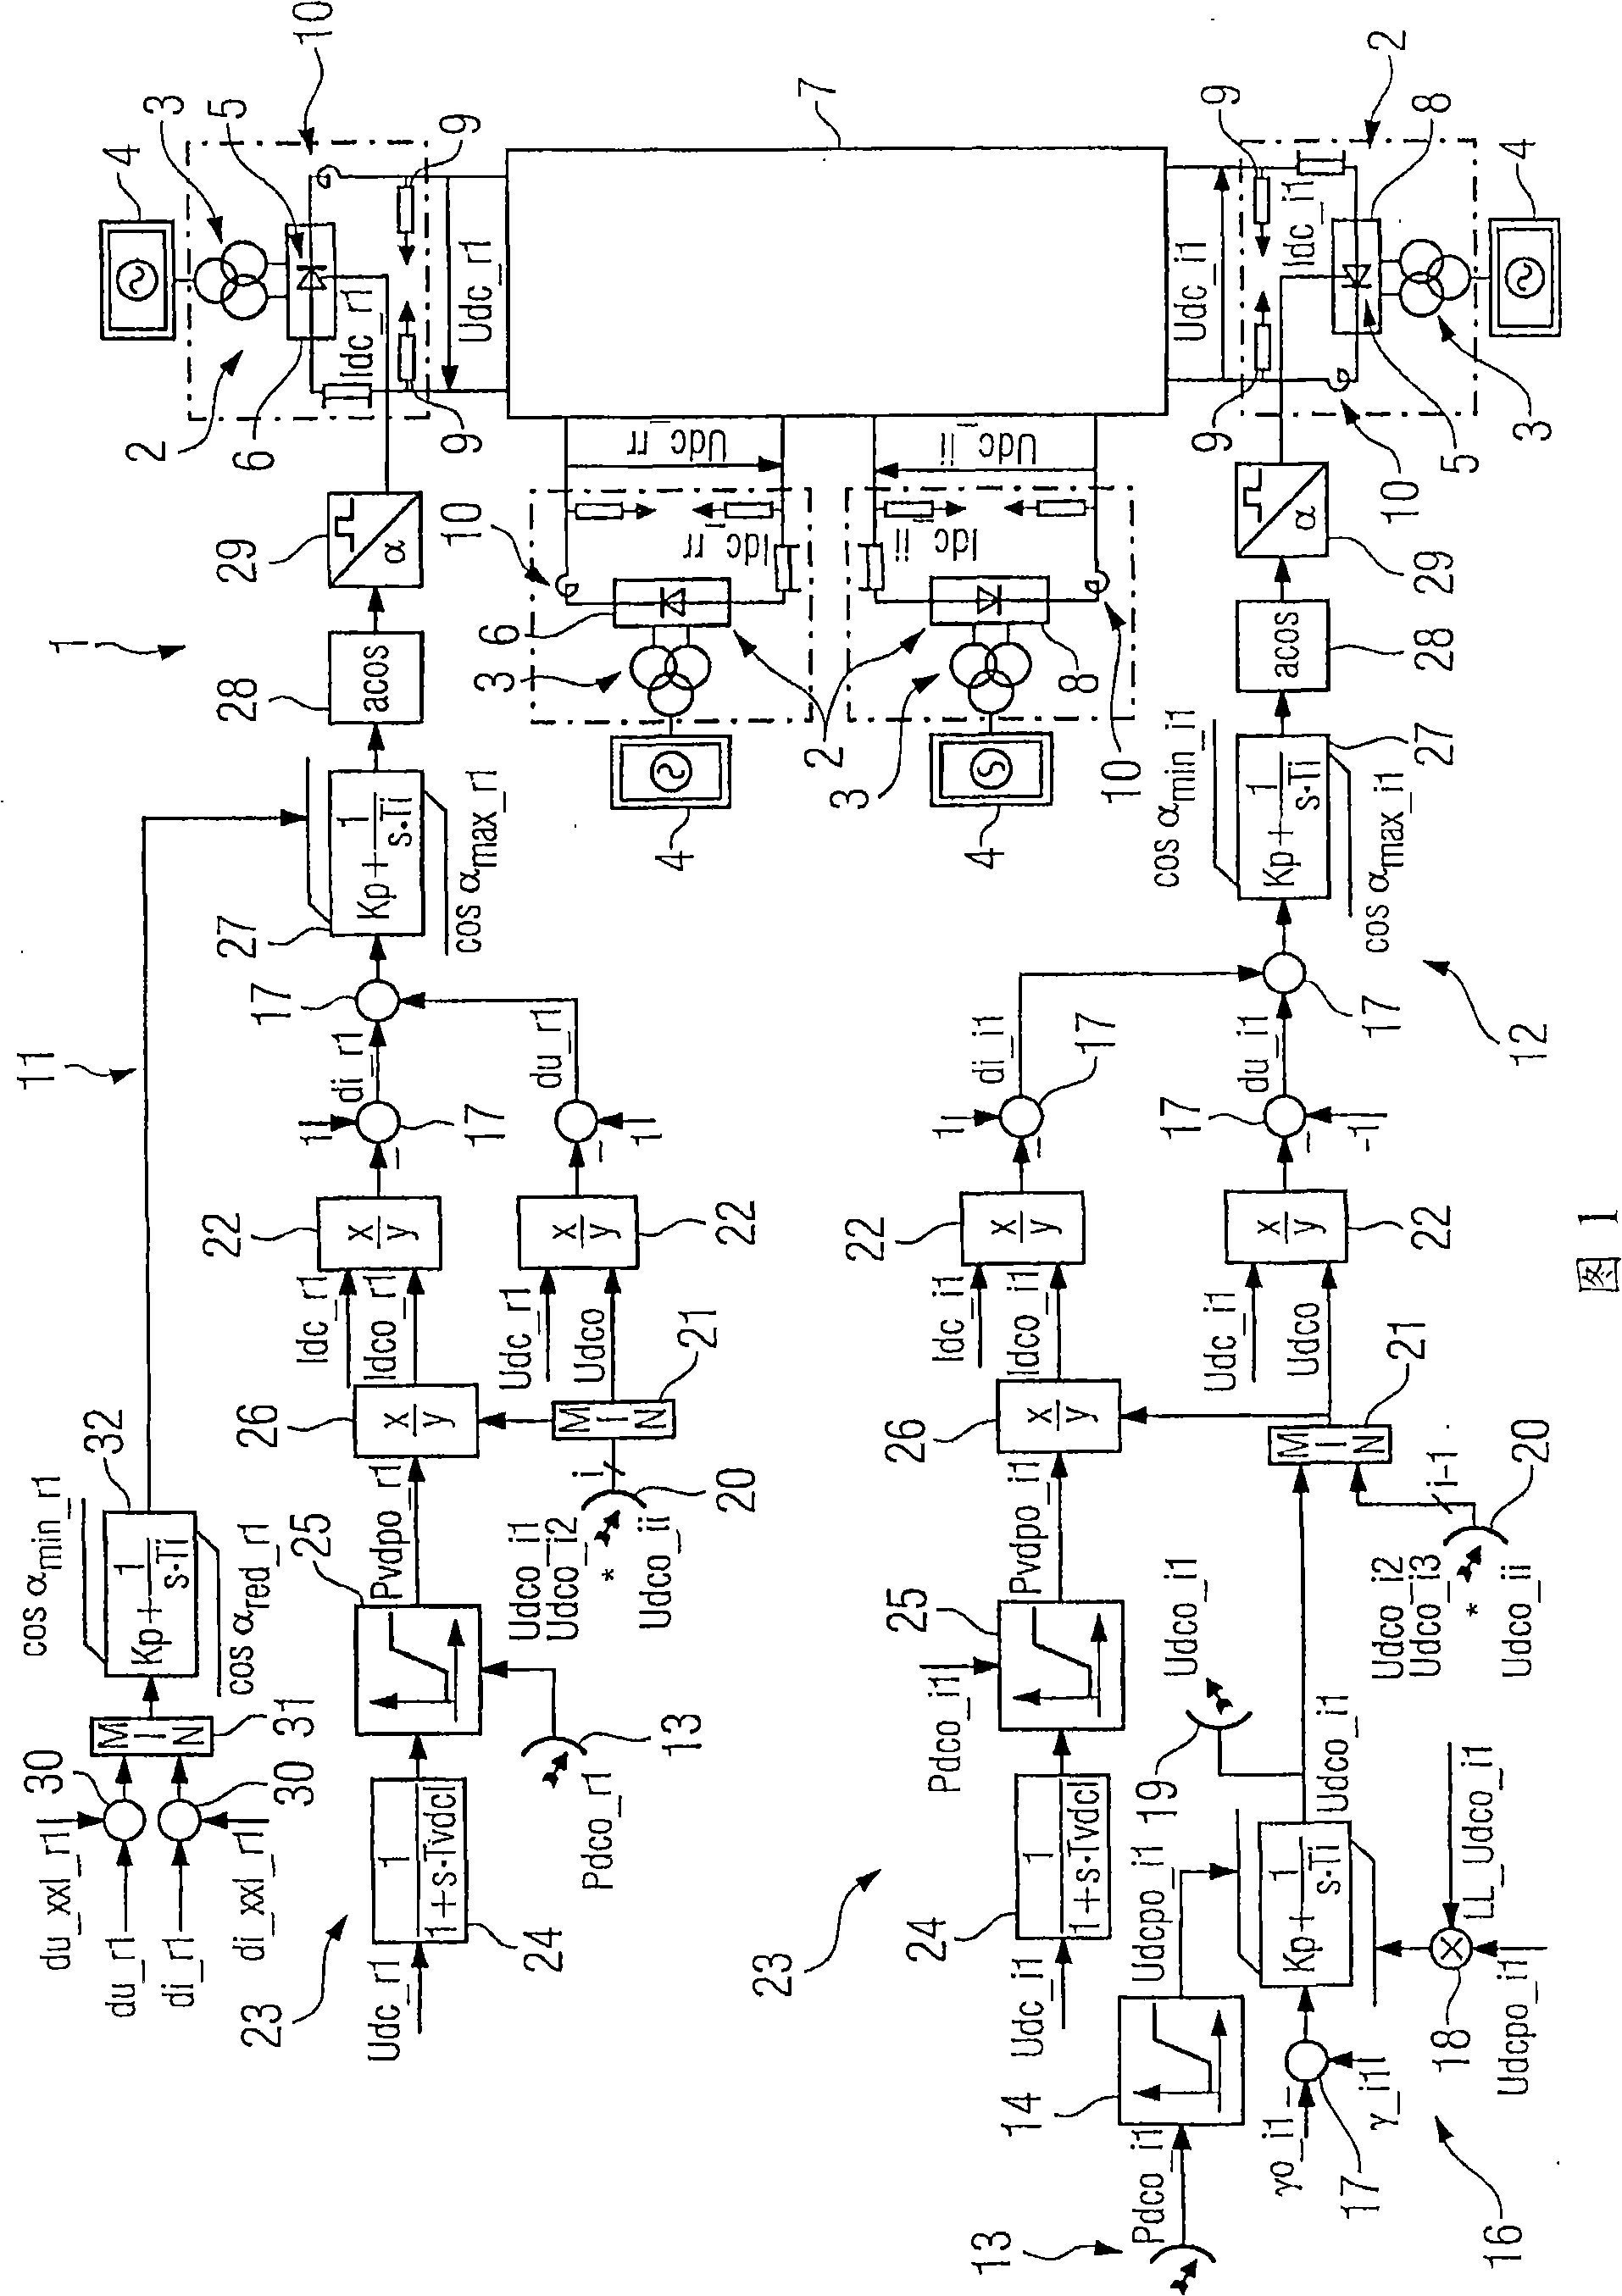 Direct-current transmission regulating method with multiple current transformers